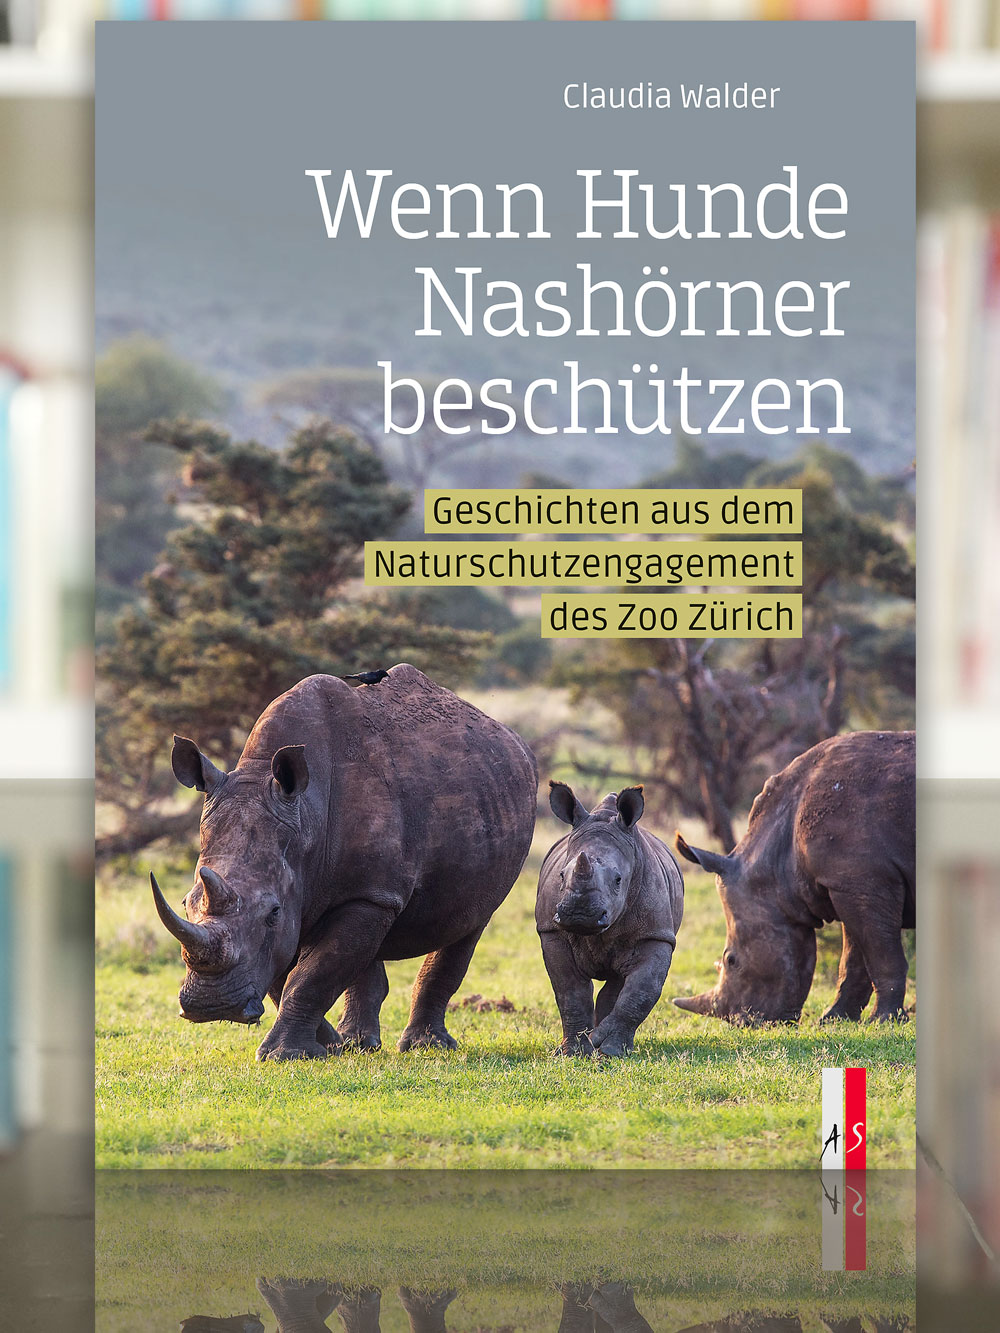 Wenn Hunde Nashörner beschützen, Claudia Walder, 2021, AS Verlag